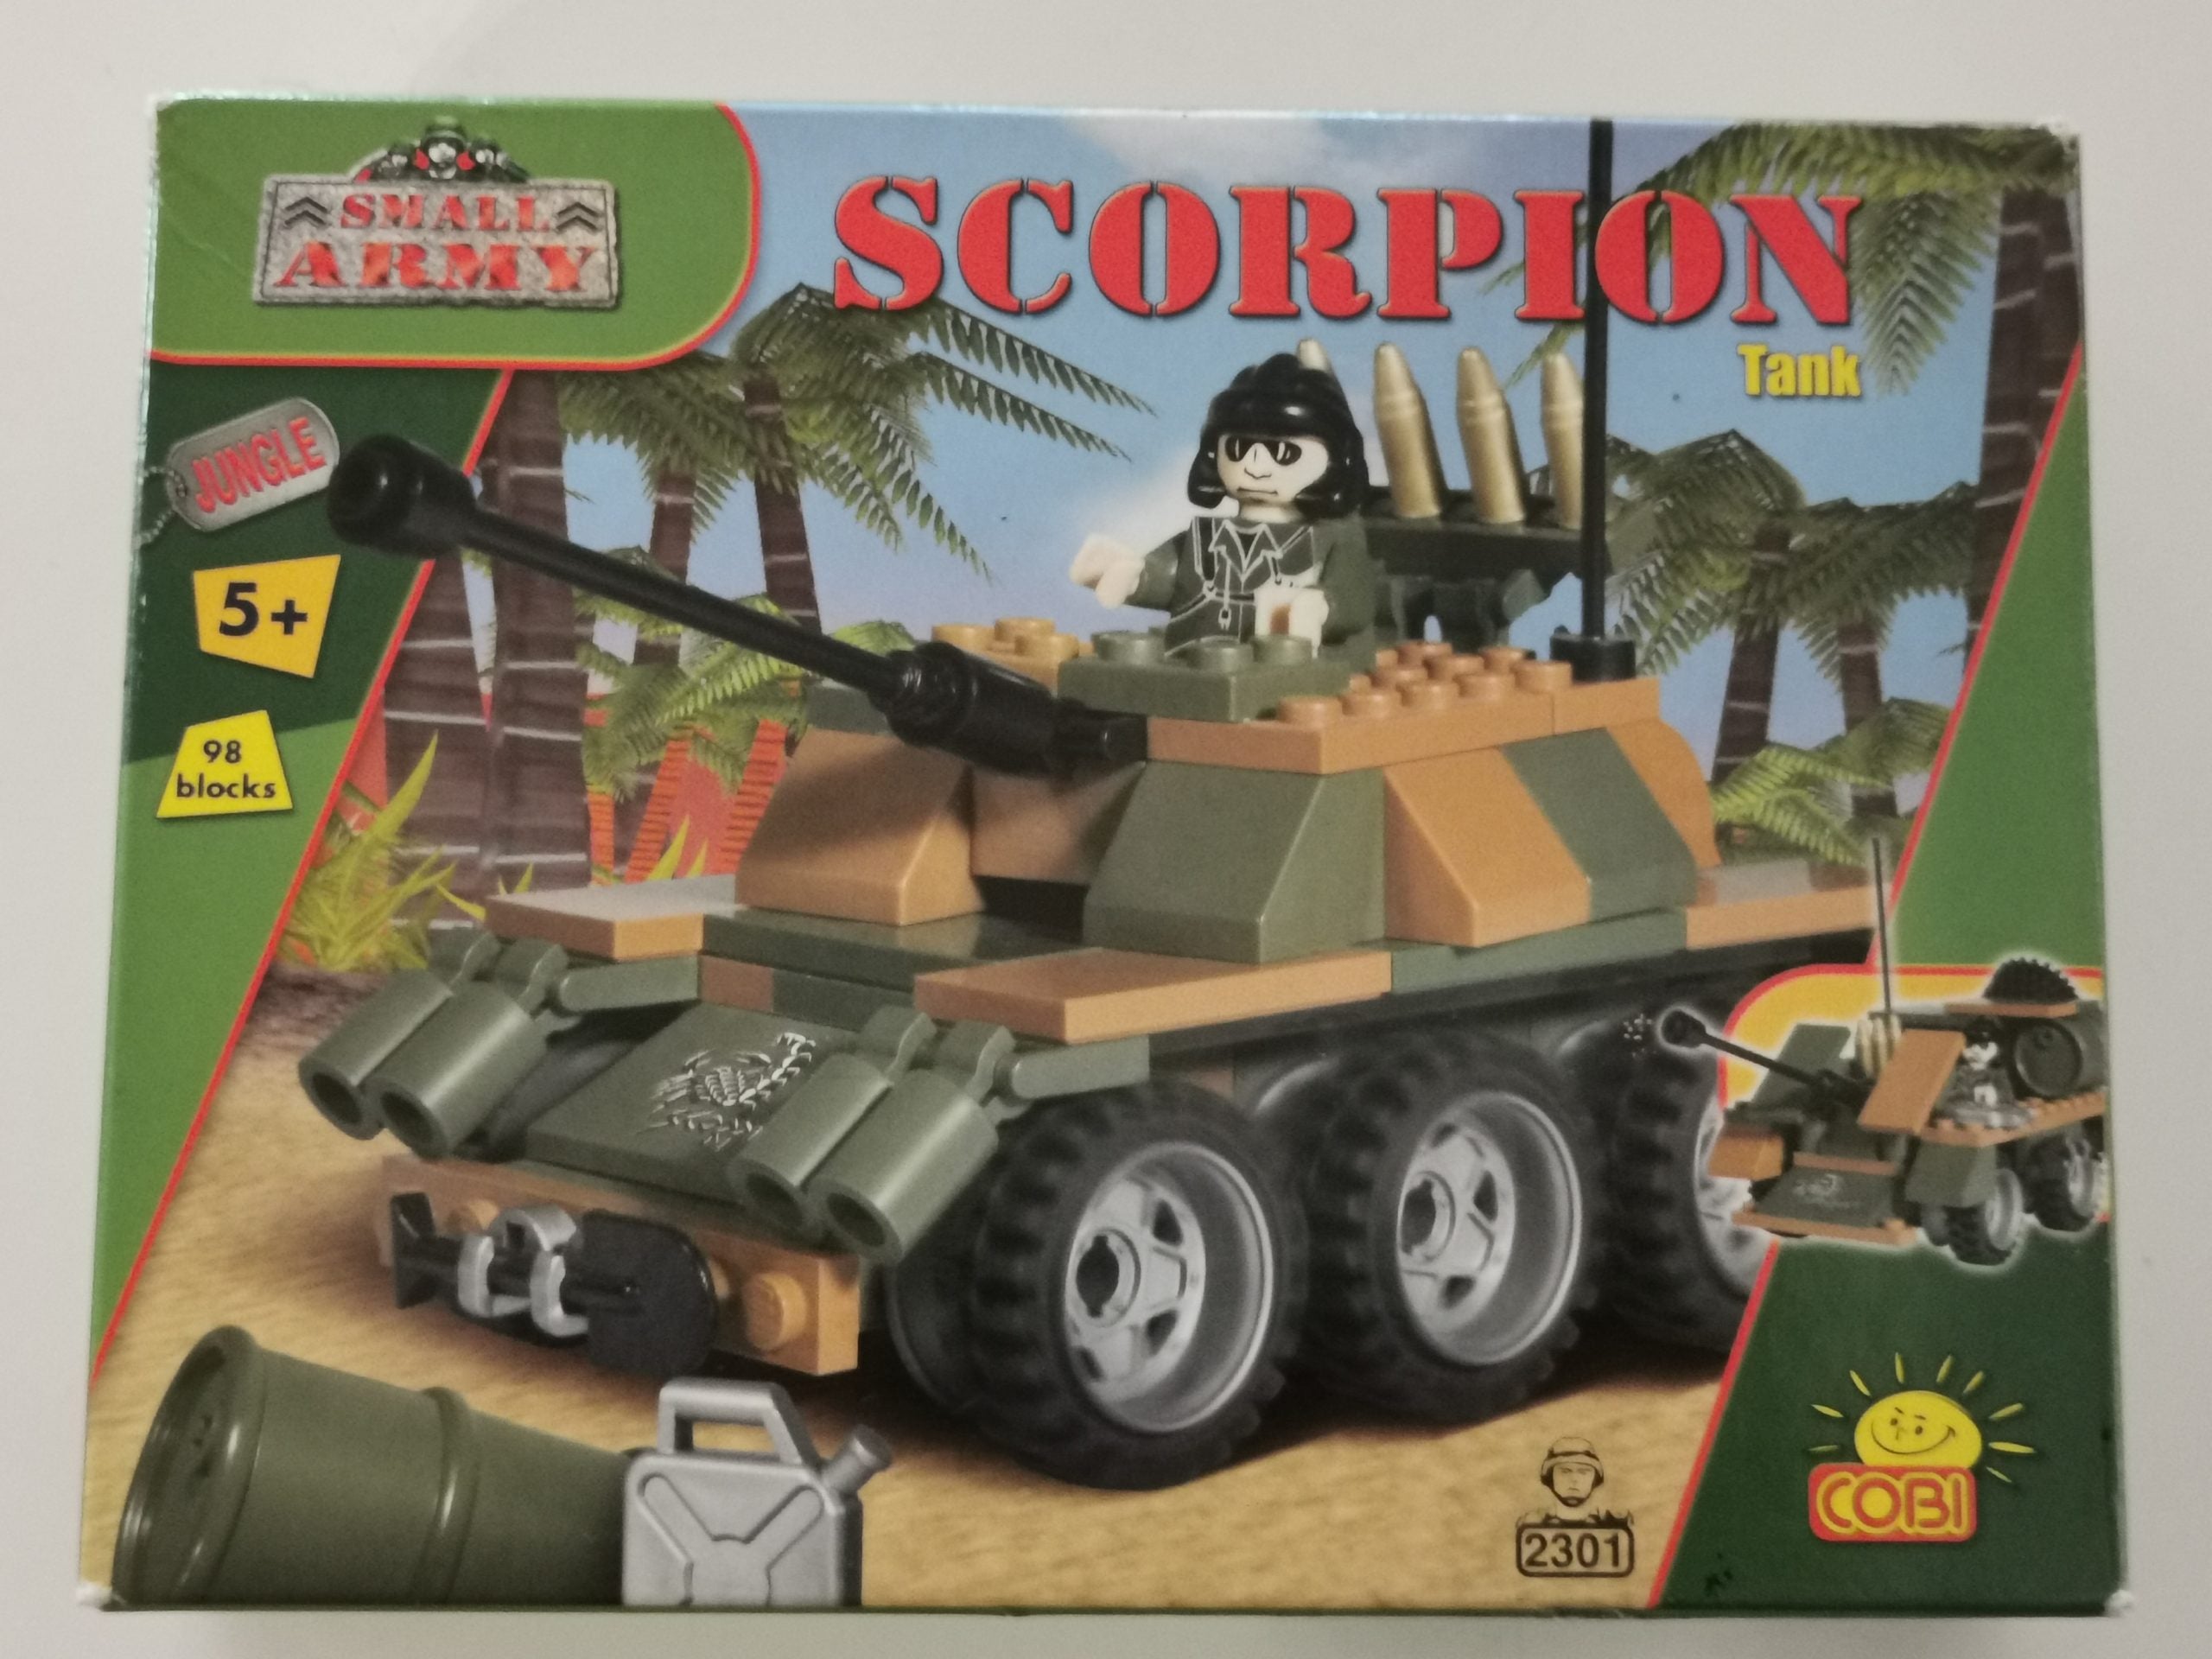 Cobi 2301 Scorpion tank used